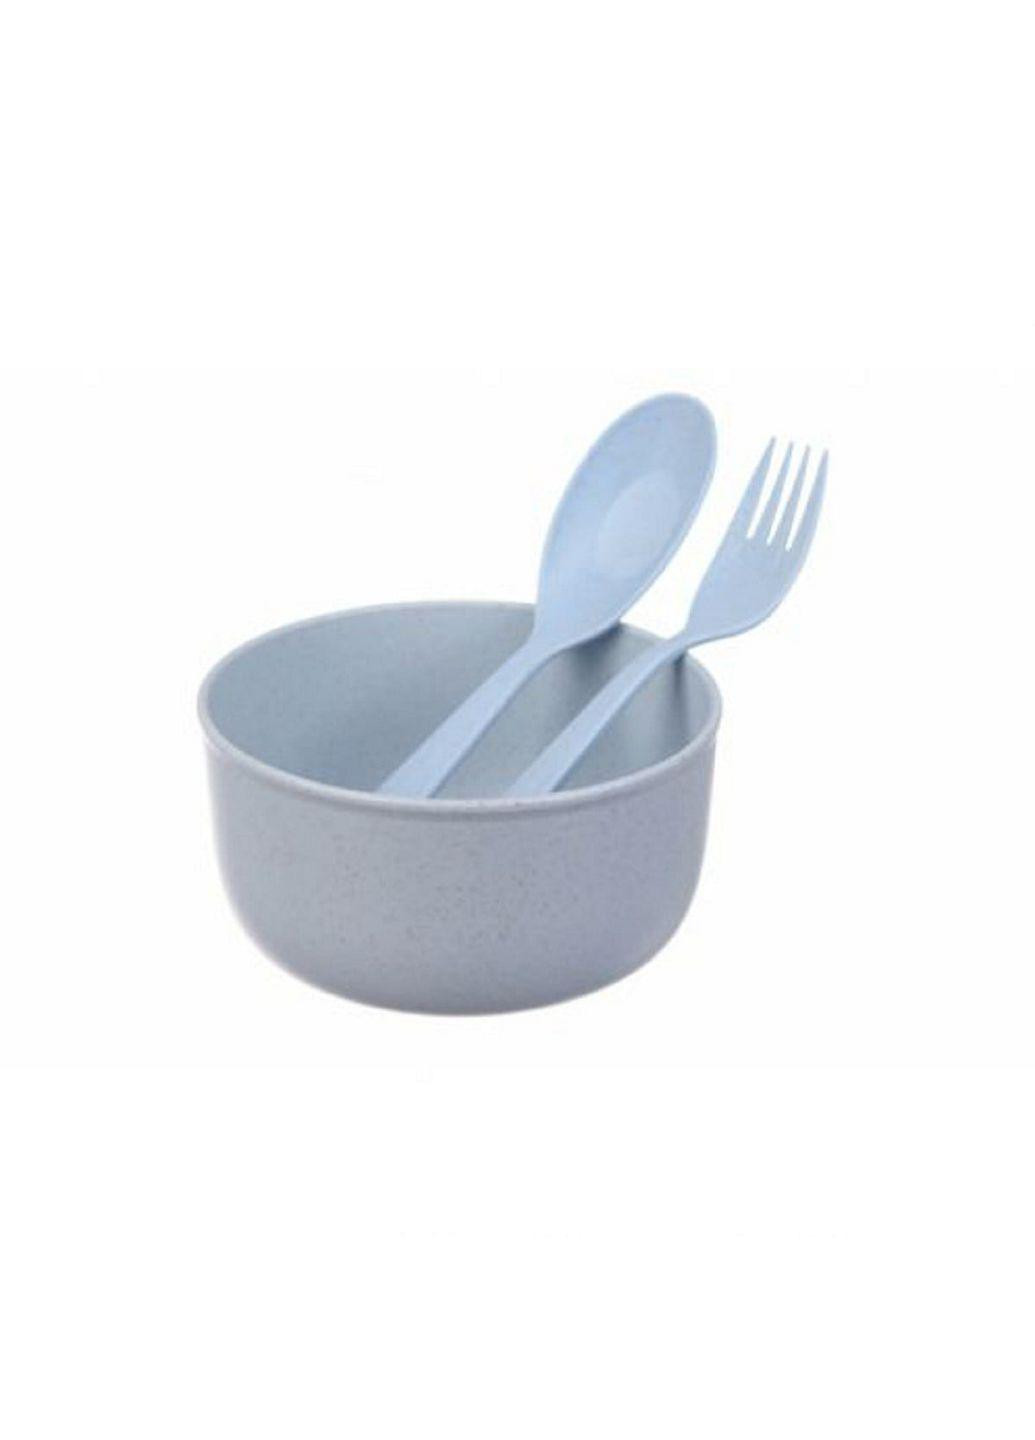 Набор посуды из экопластика (3 предмета), голубой (68-208) No Brand тёмно-голубые